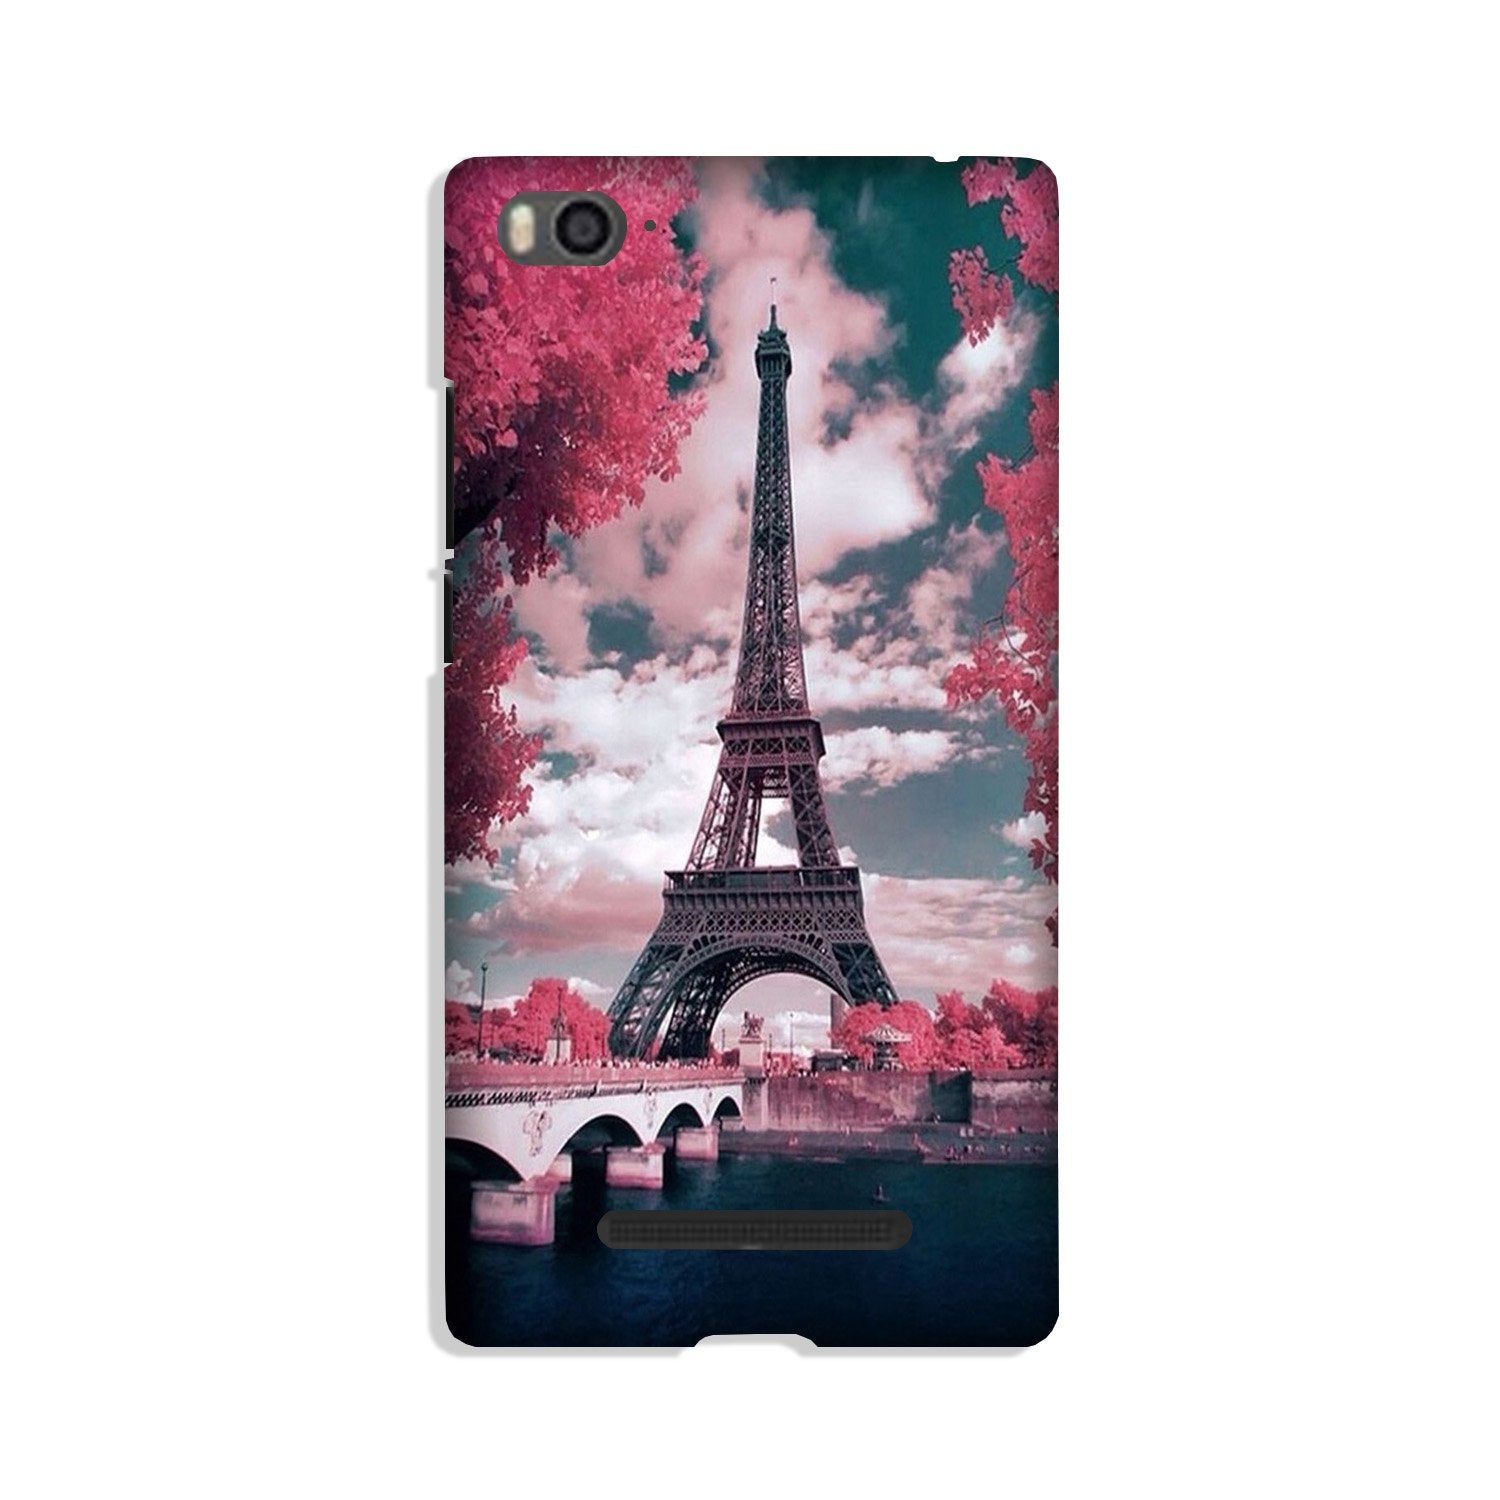 Eiffel Tower Case for Xiaomi Mi 4i(Design - 101)